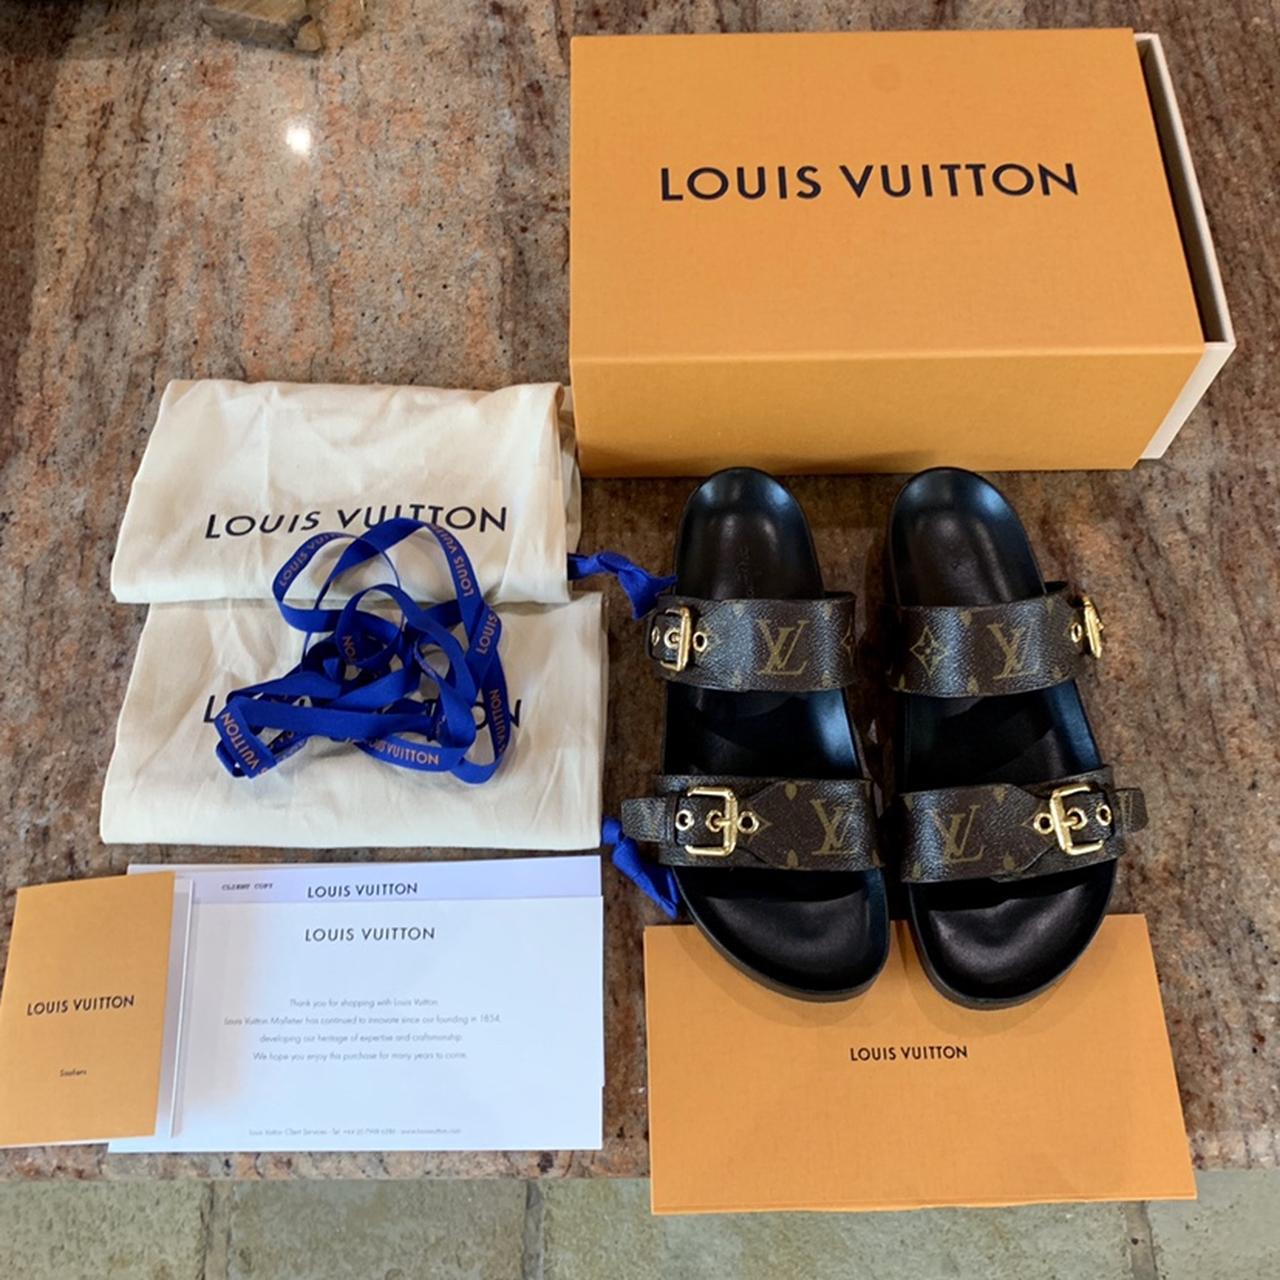 LOUIS VUITTON BOM DIA FLAT MULE 4️⃣7️⃣5️⃣ Size 38.5 £475